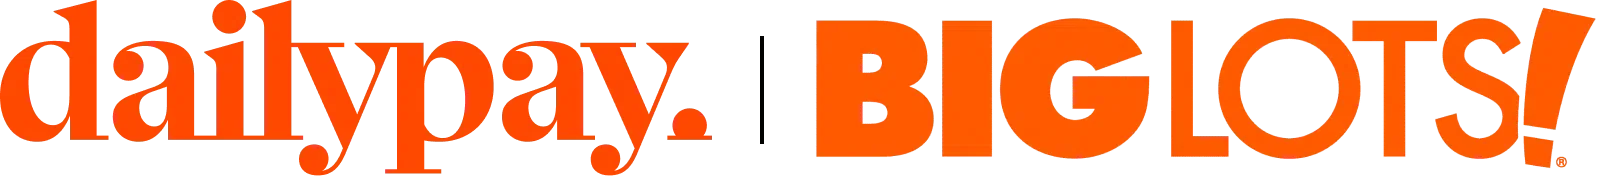 dp-biglots-logo